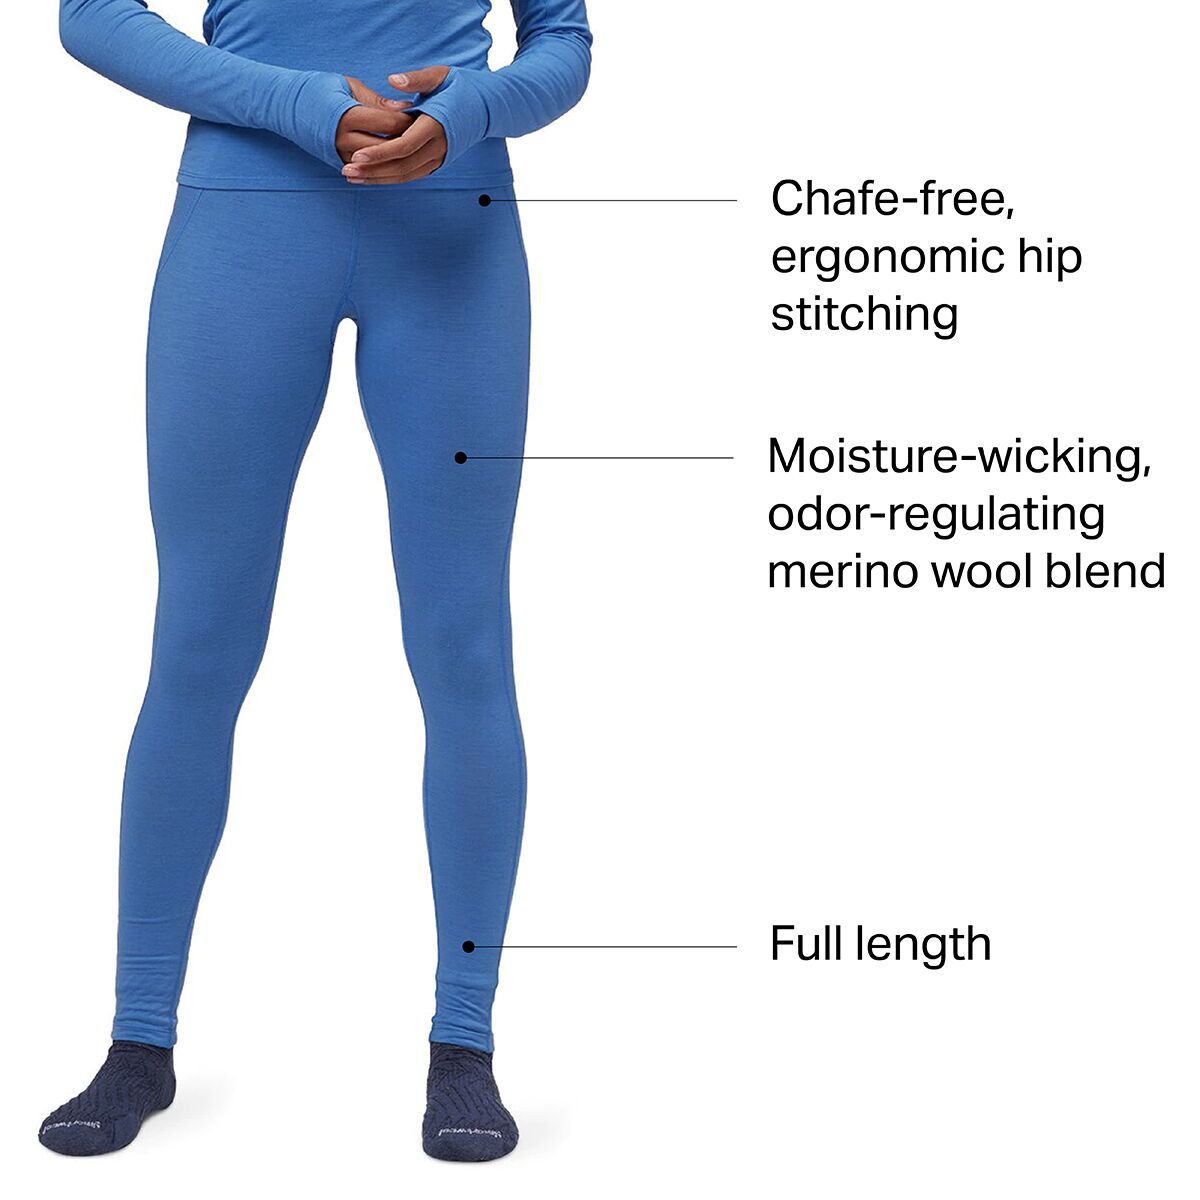 tittimitti Merino Wool Blend Thermal Underwear Base Layer Leggings